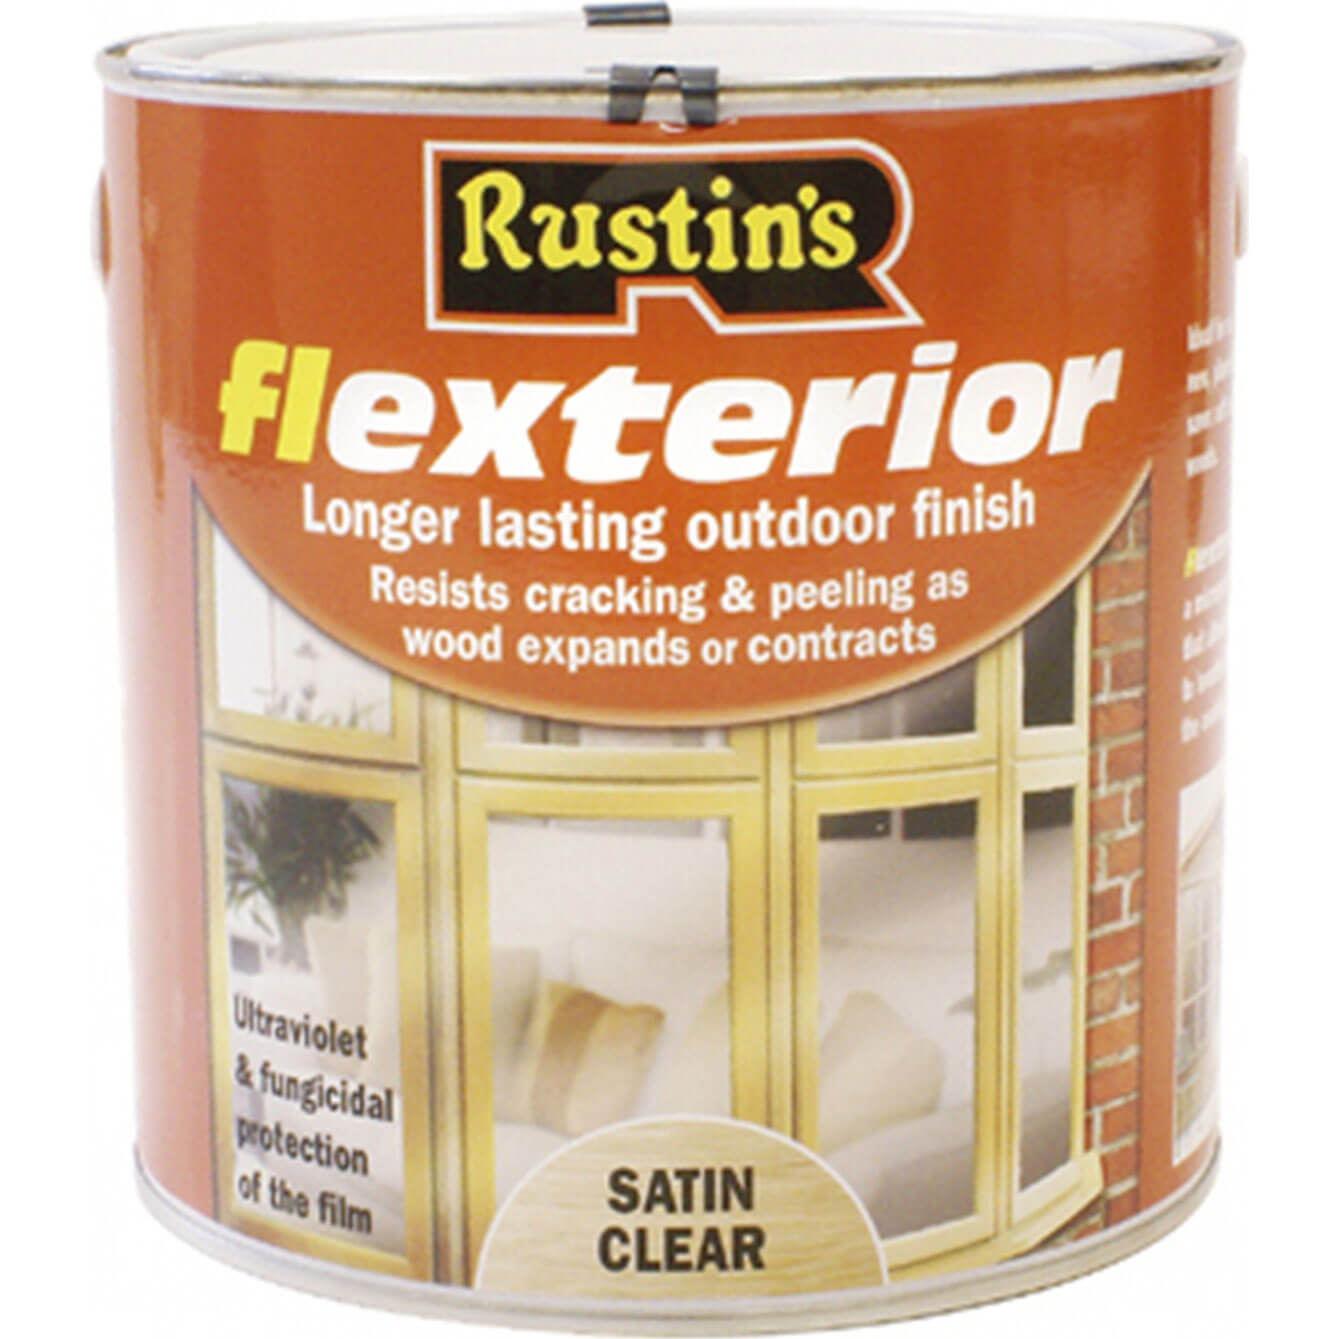 Rustins Flexterior Varnish Clear 2.5 Litre